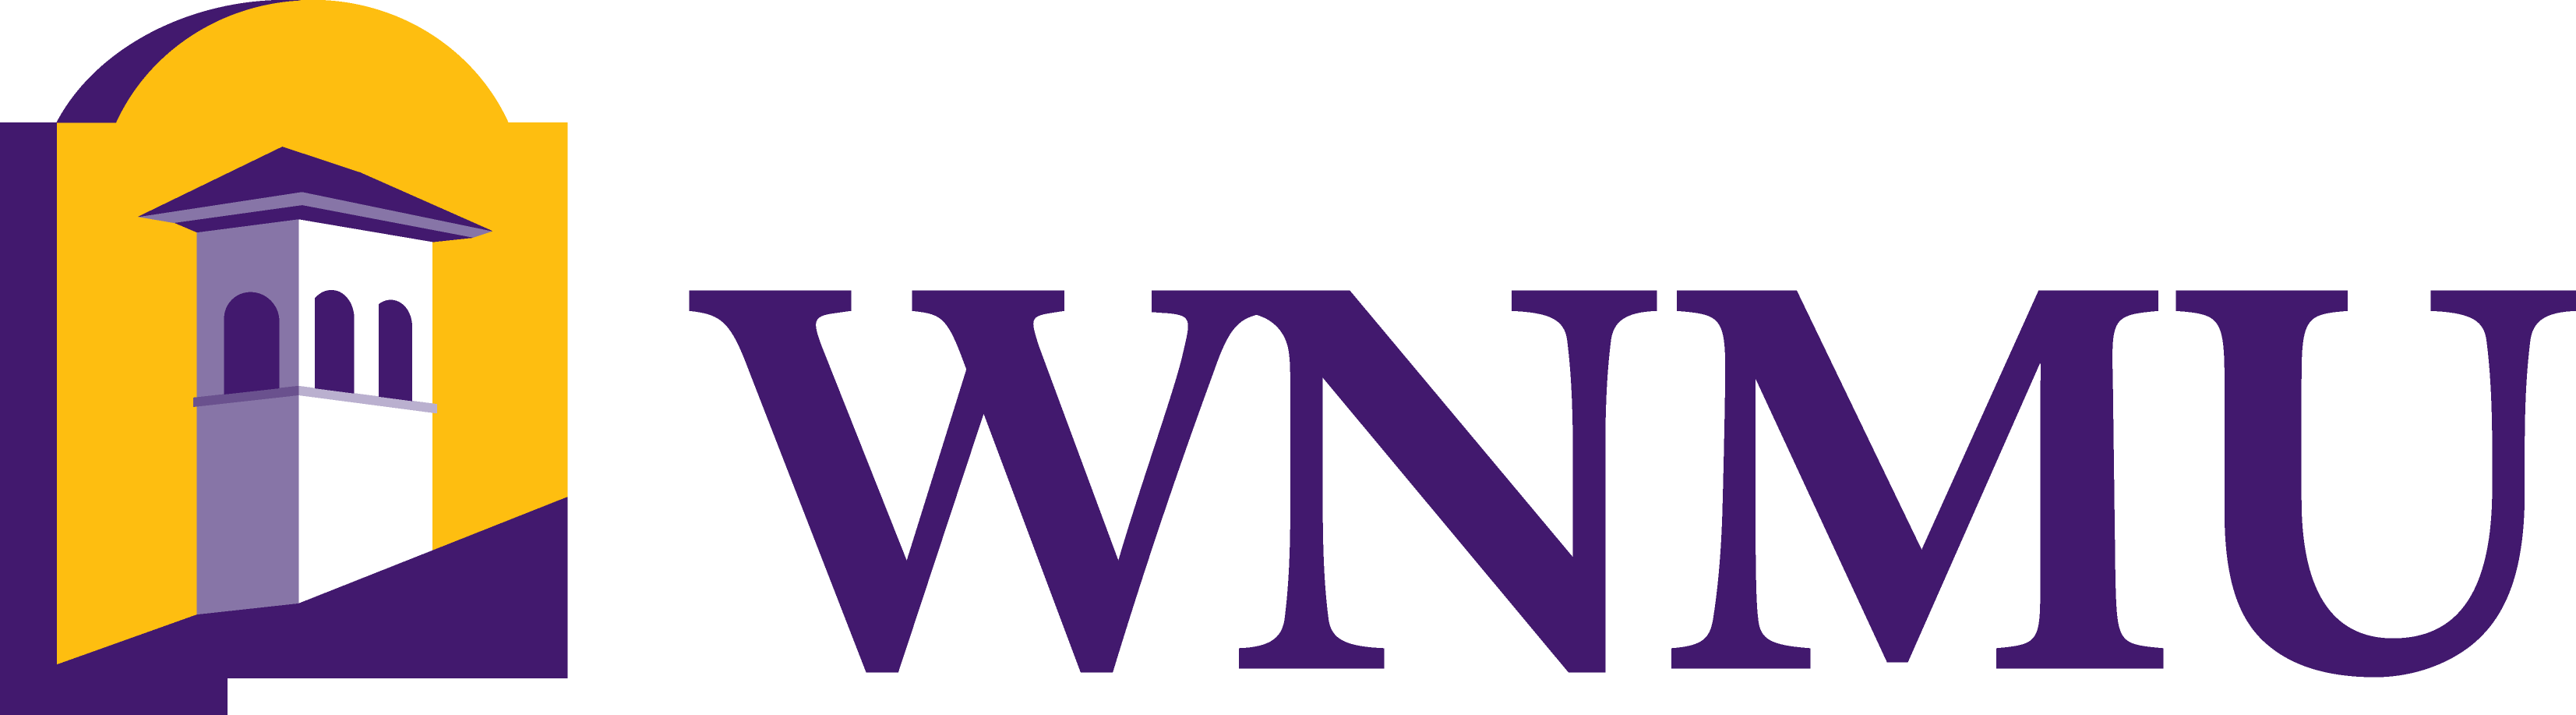 Primary Logo - Western New Mexico University Logo (3306x917)